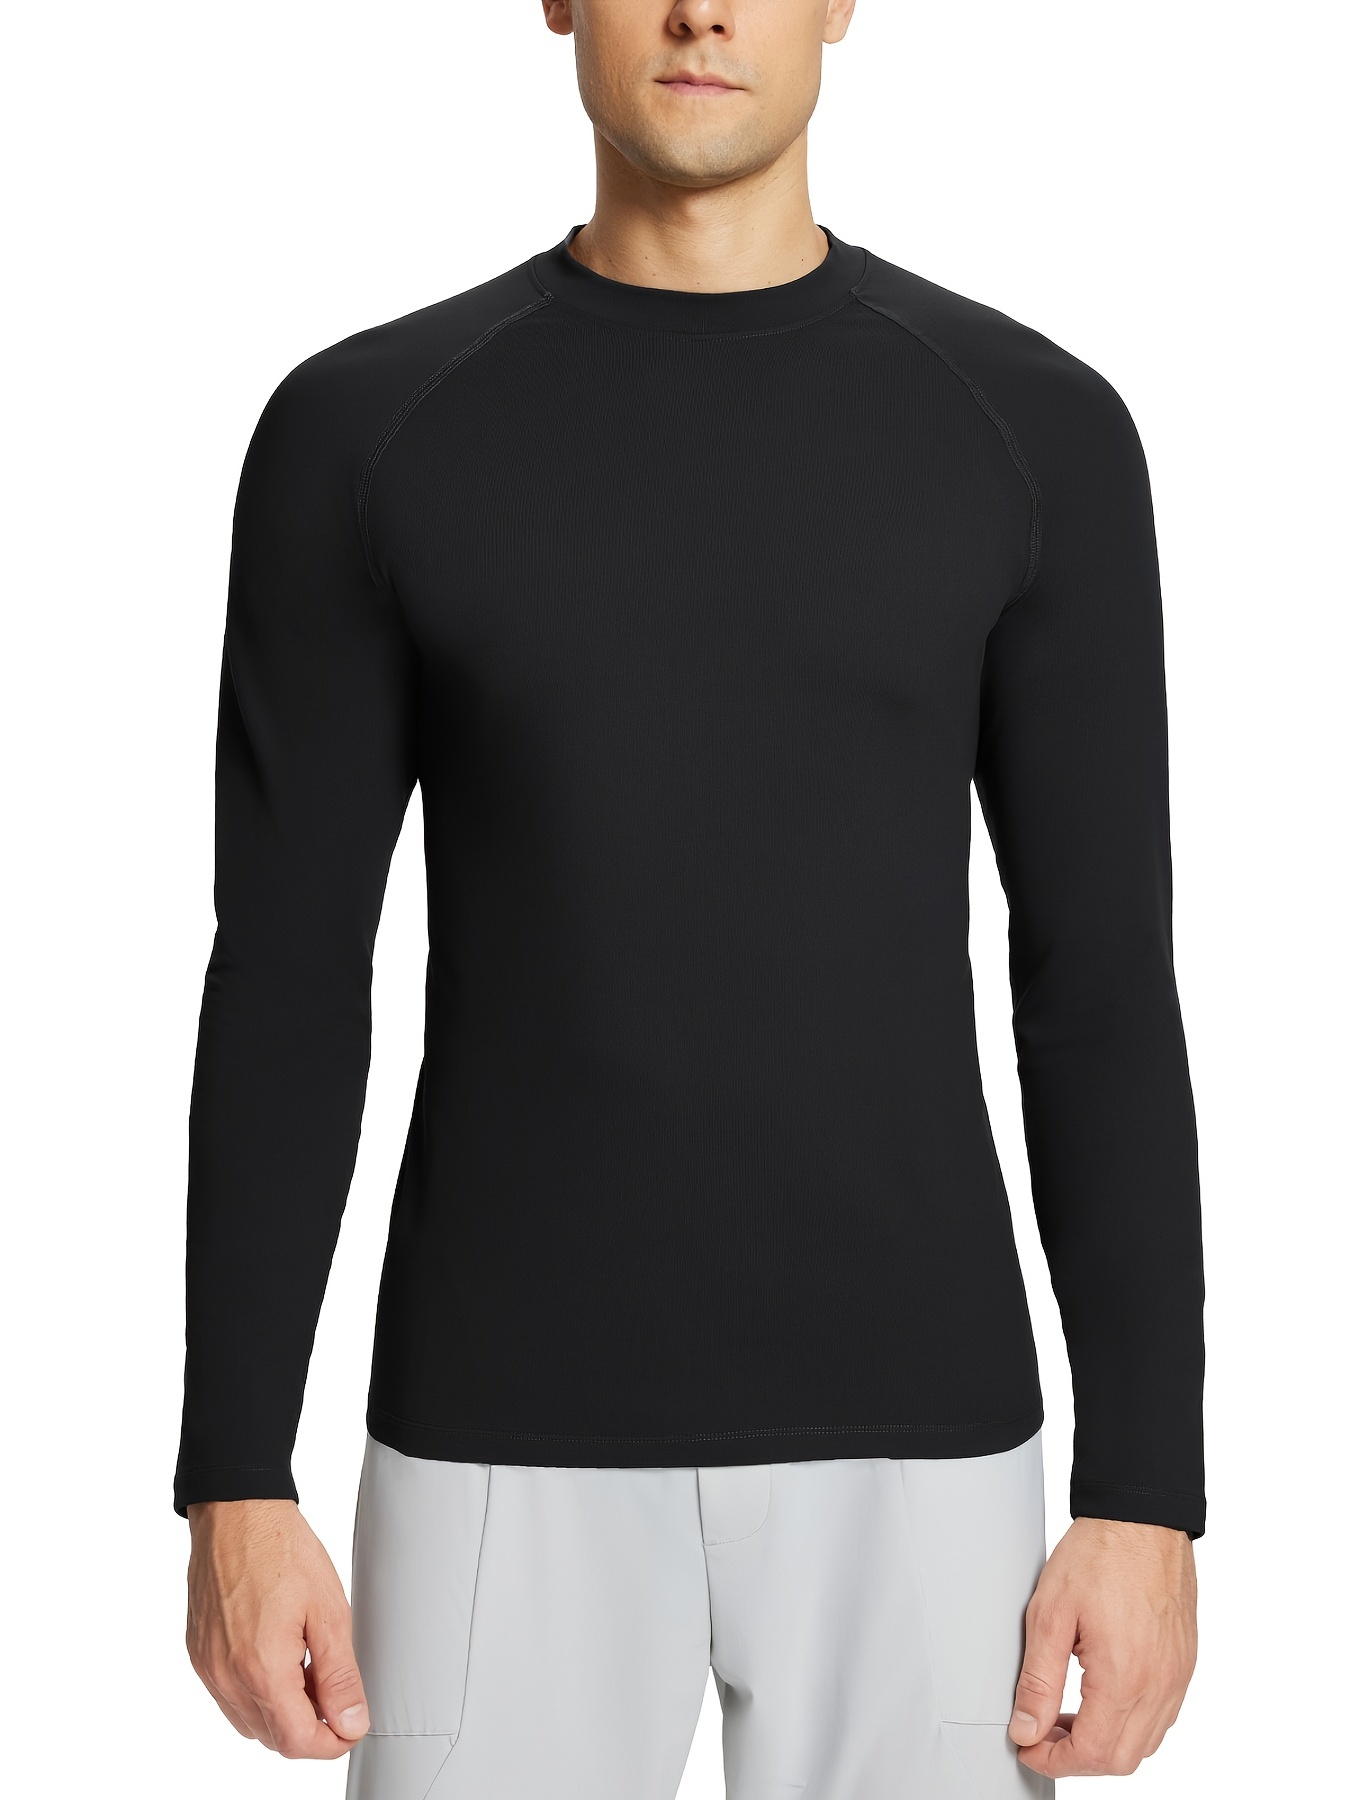 Stay Warm Dry: Baleaf Men's Long Sleeve Thermal Fleece Shirt